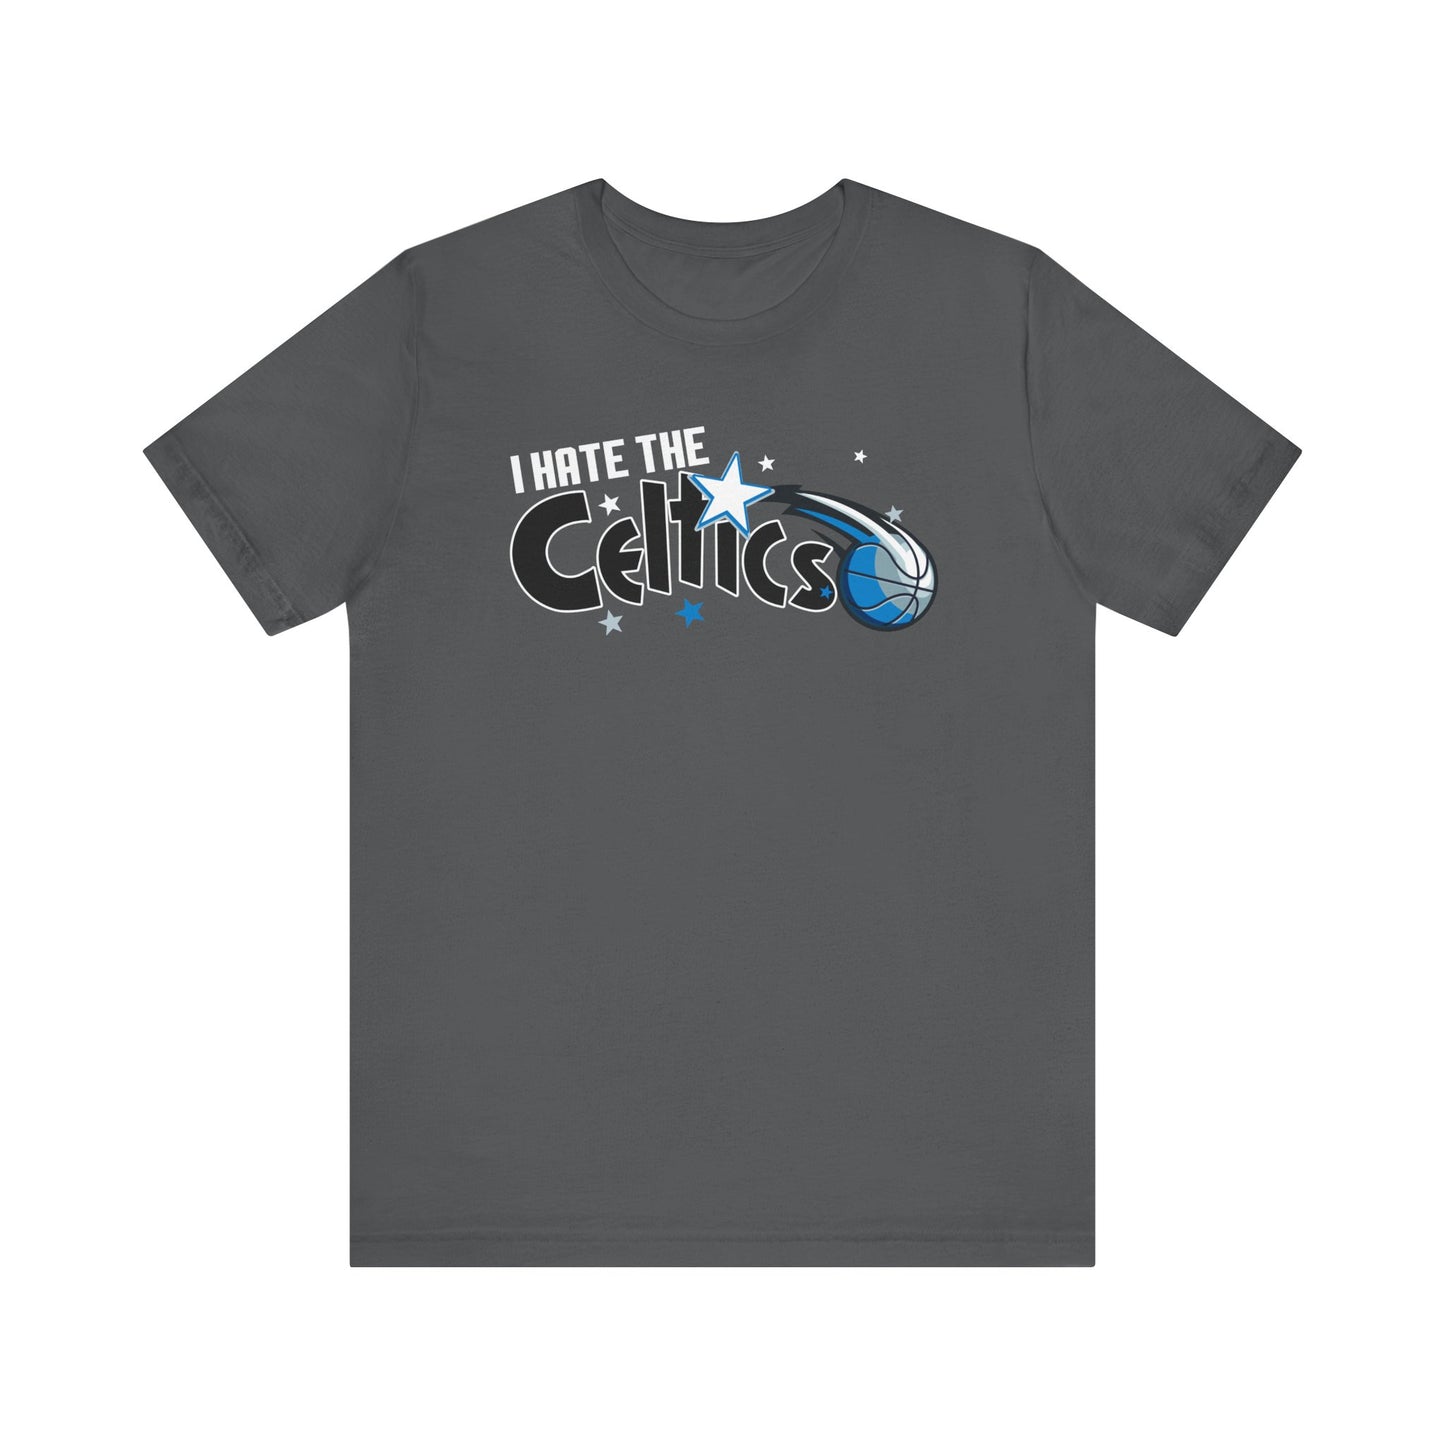 I Hate The Sellticks (for Orlando fans) - Unisex Jersey Short Sleeve Tee